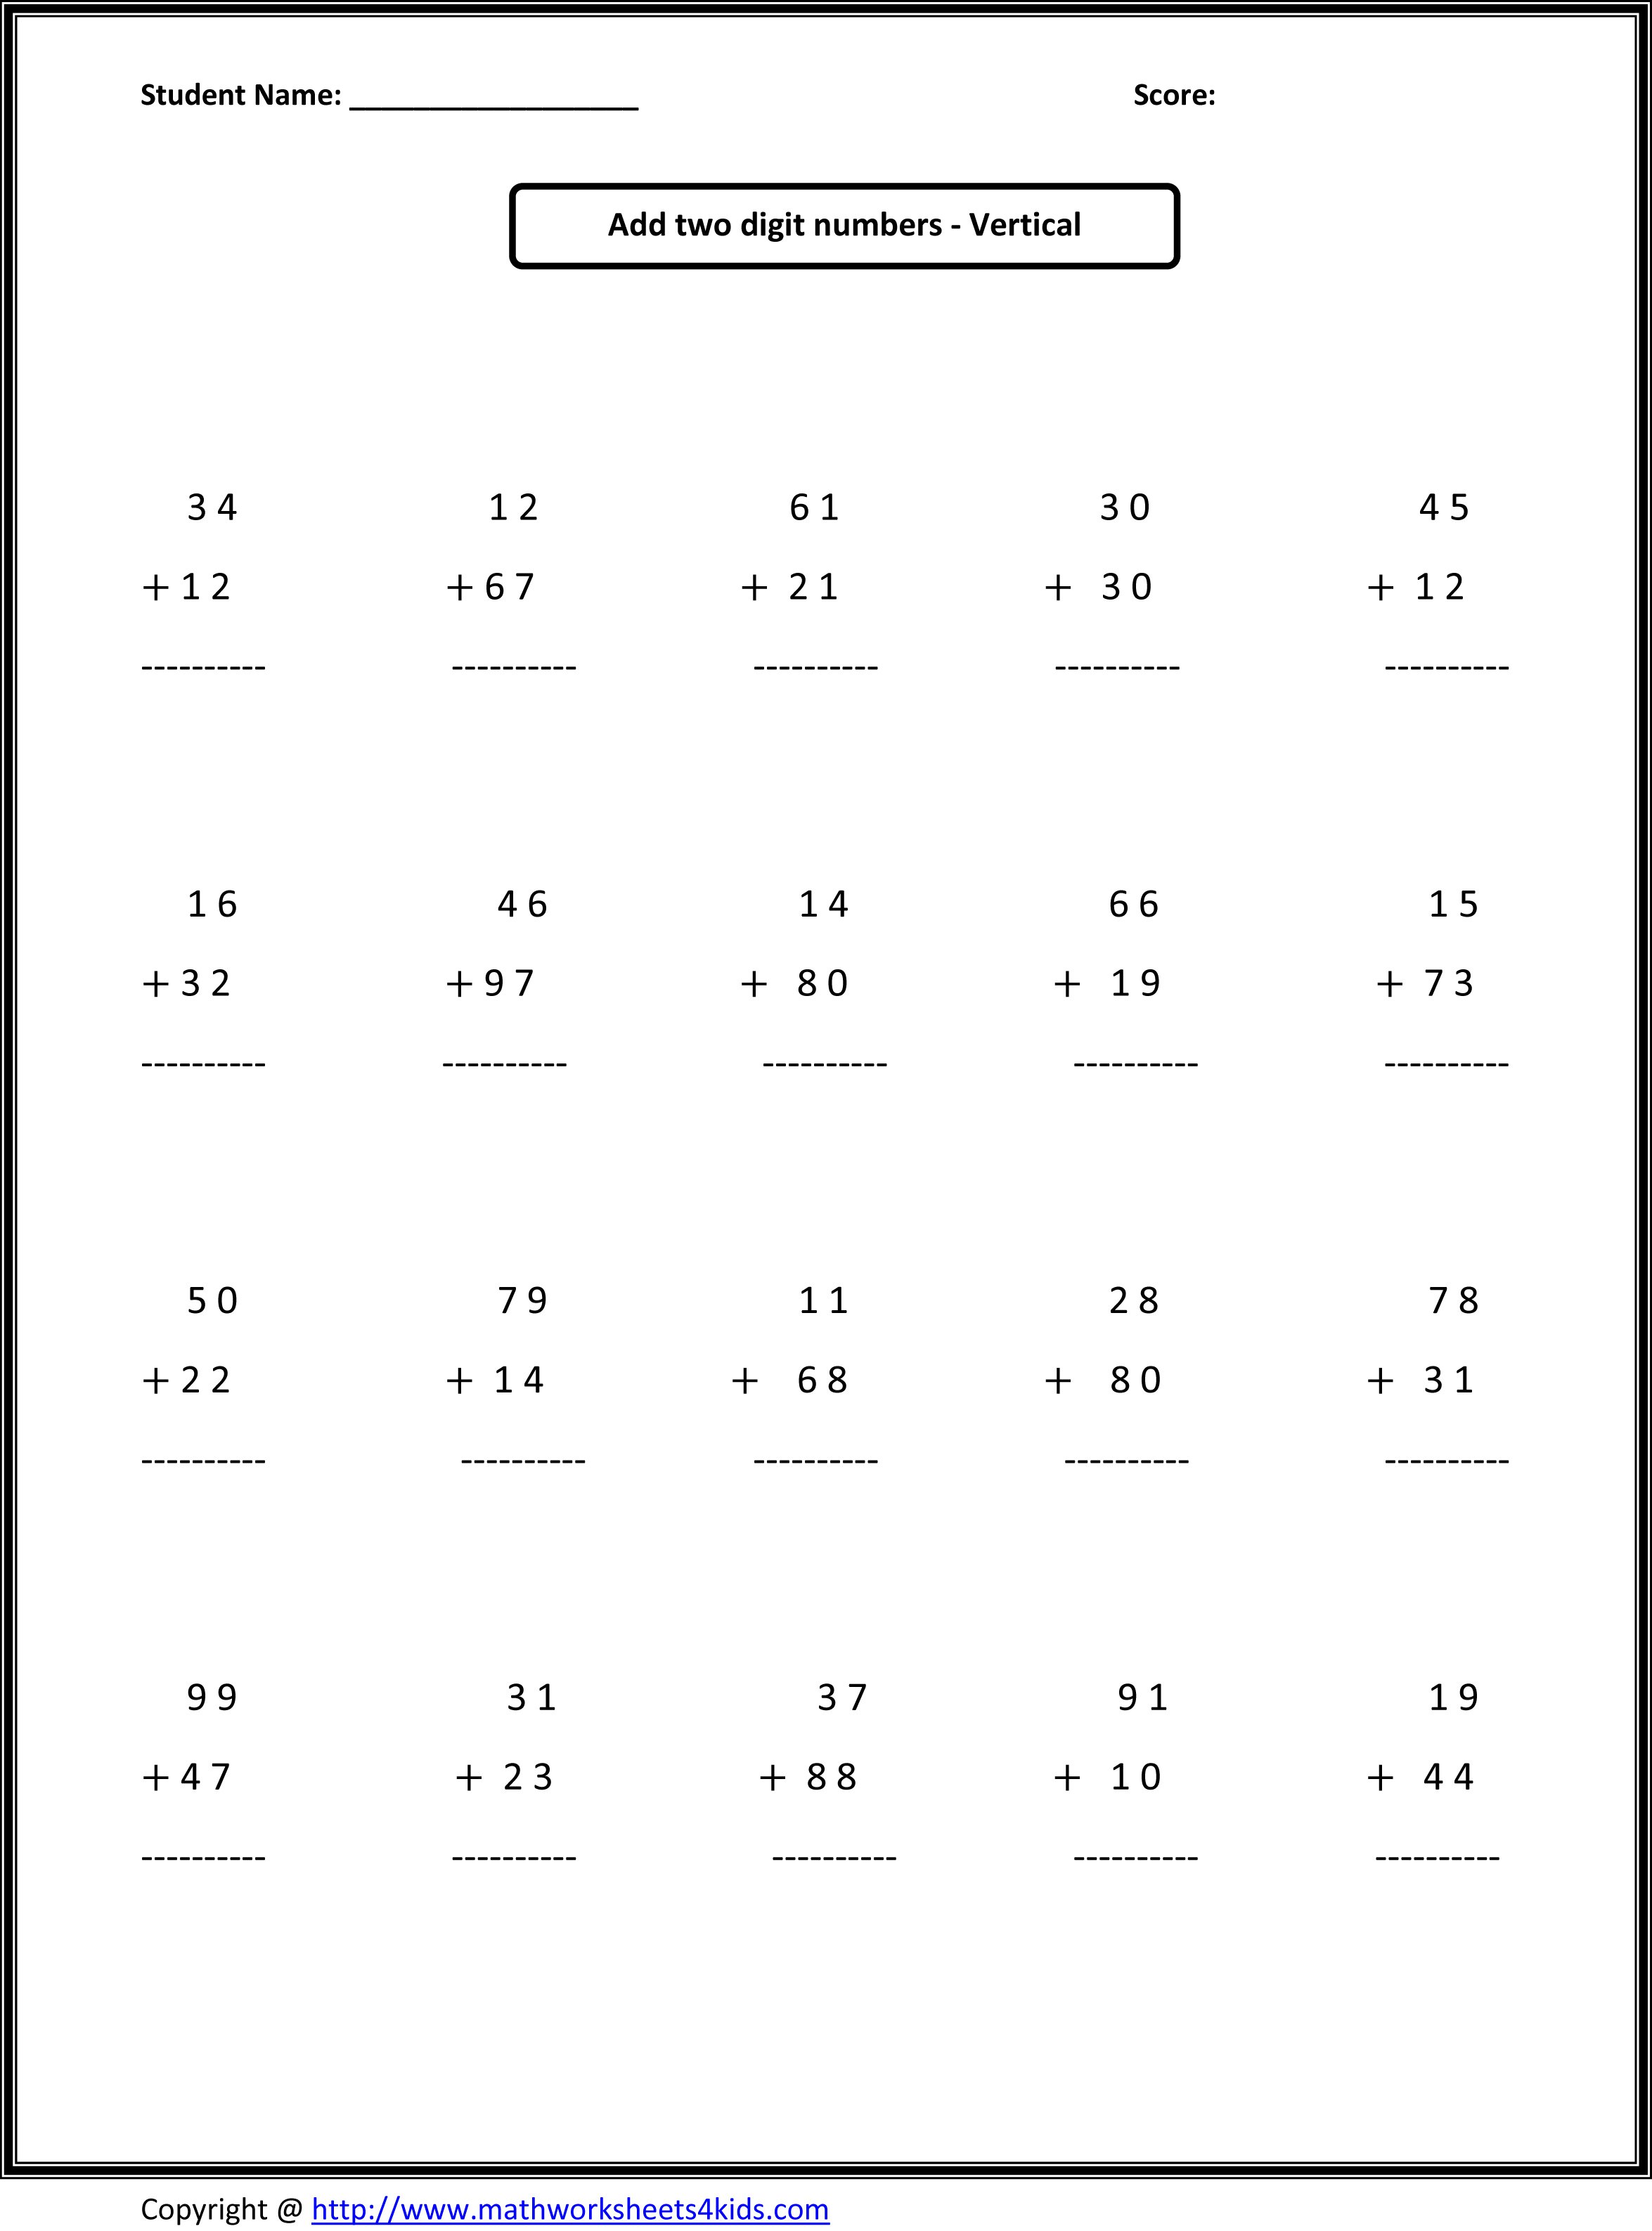 44 Second Grade Addition Worksheets, 2nd Grade Math Addition